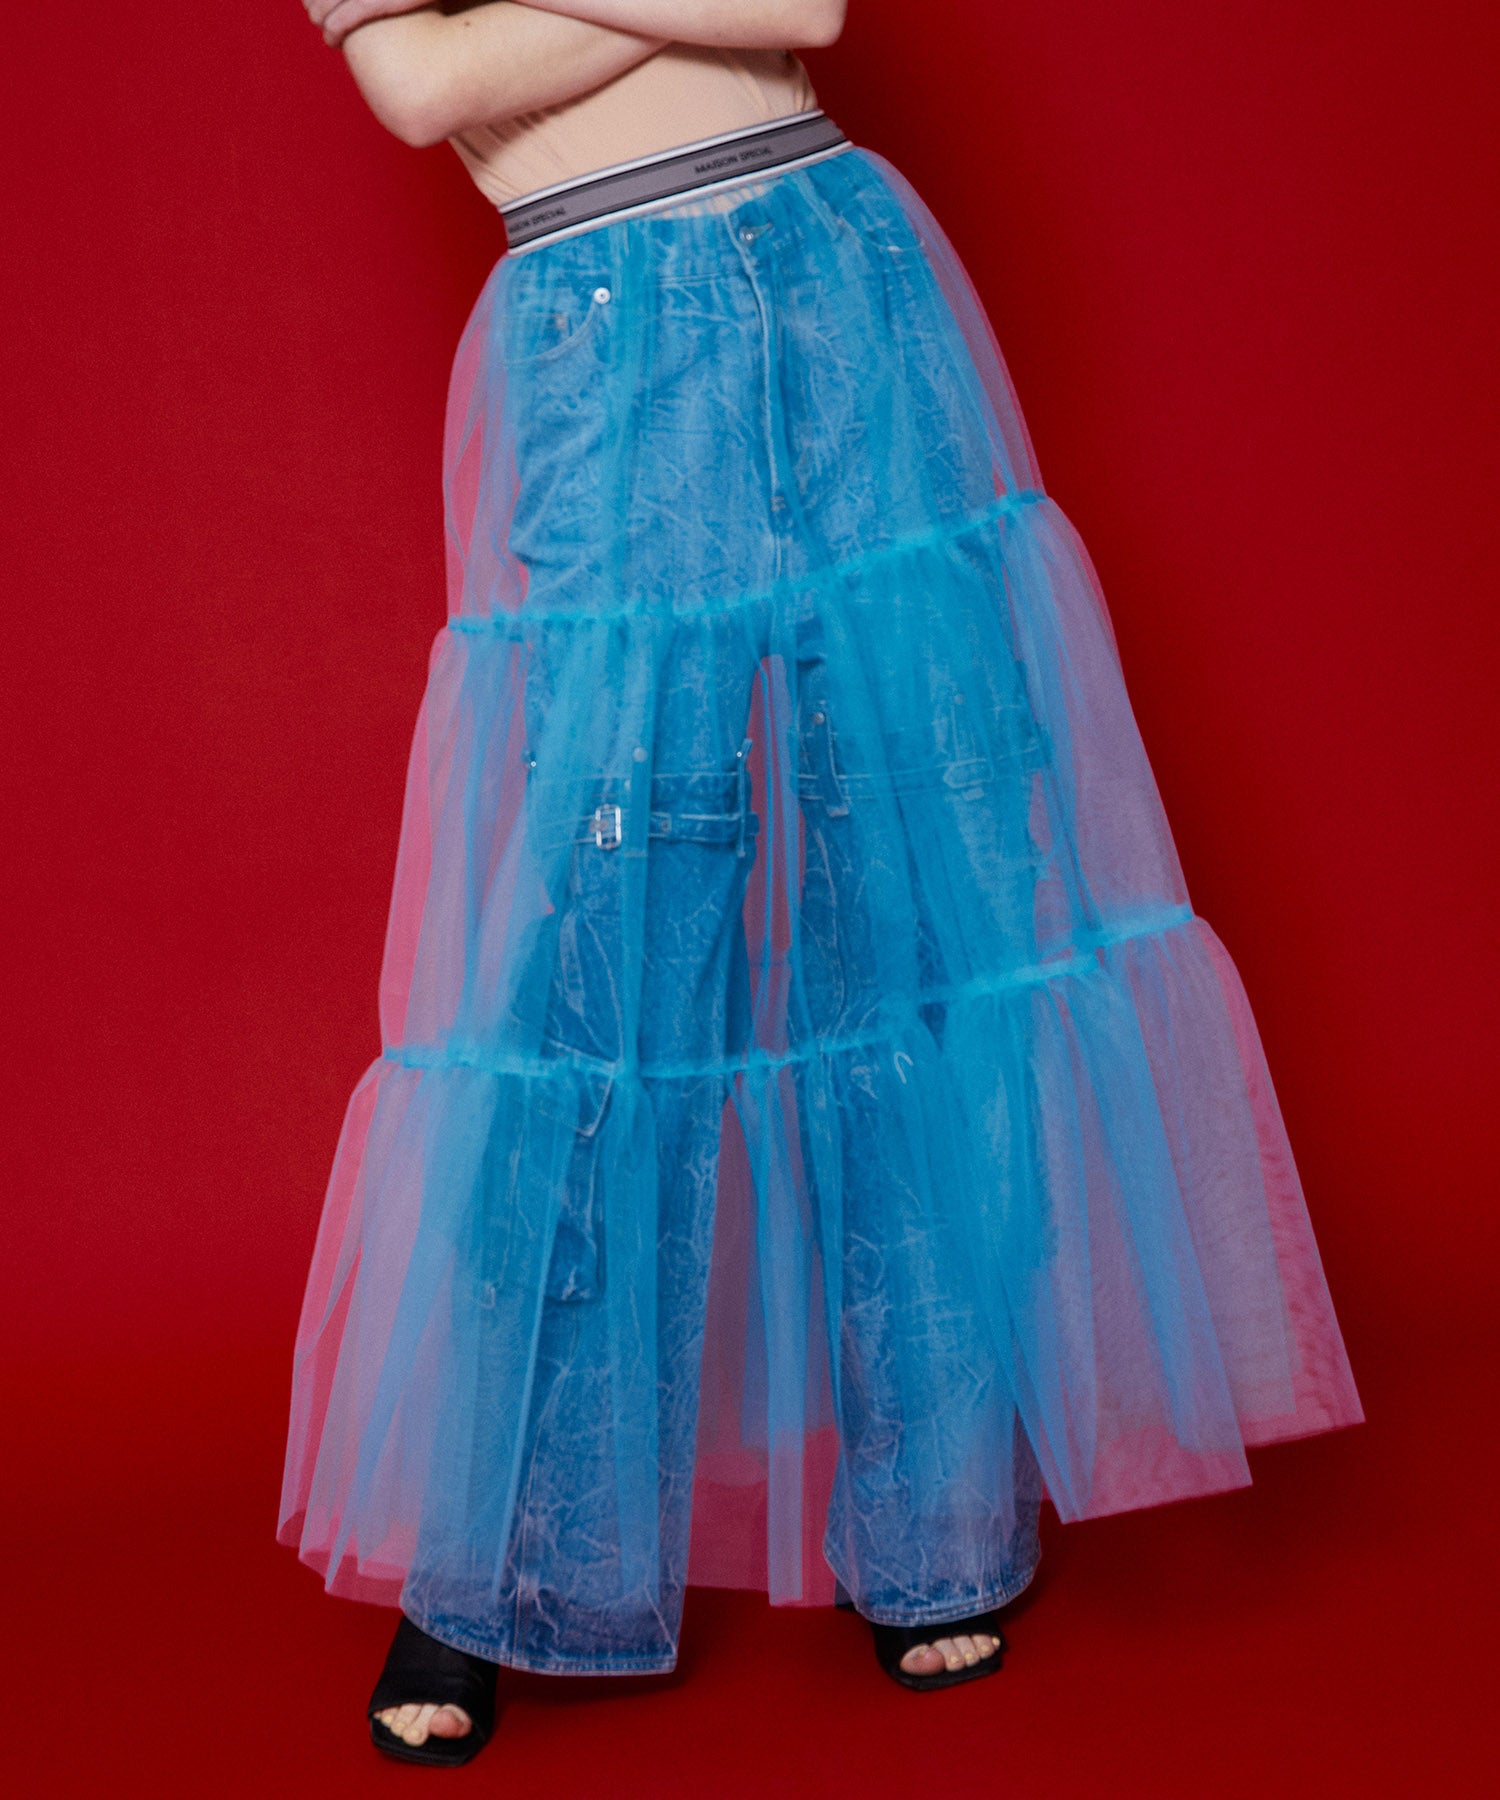 Tiered Tulle Skirt